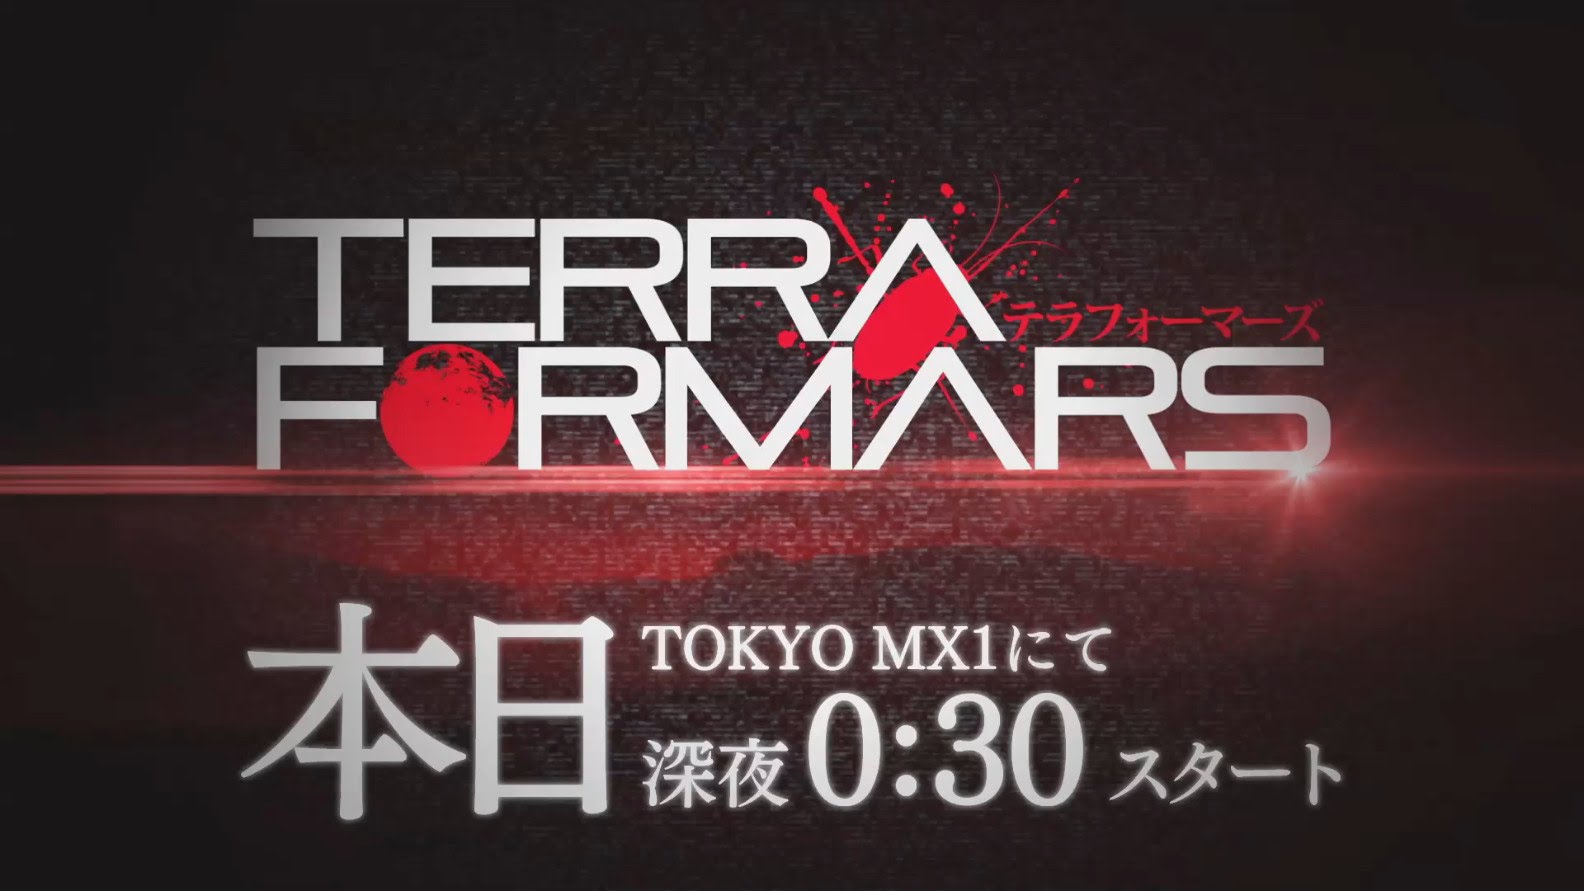 Sidste trailer for Terra Formars